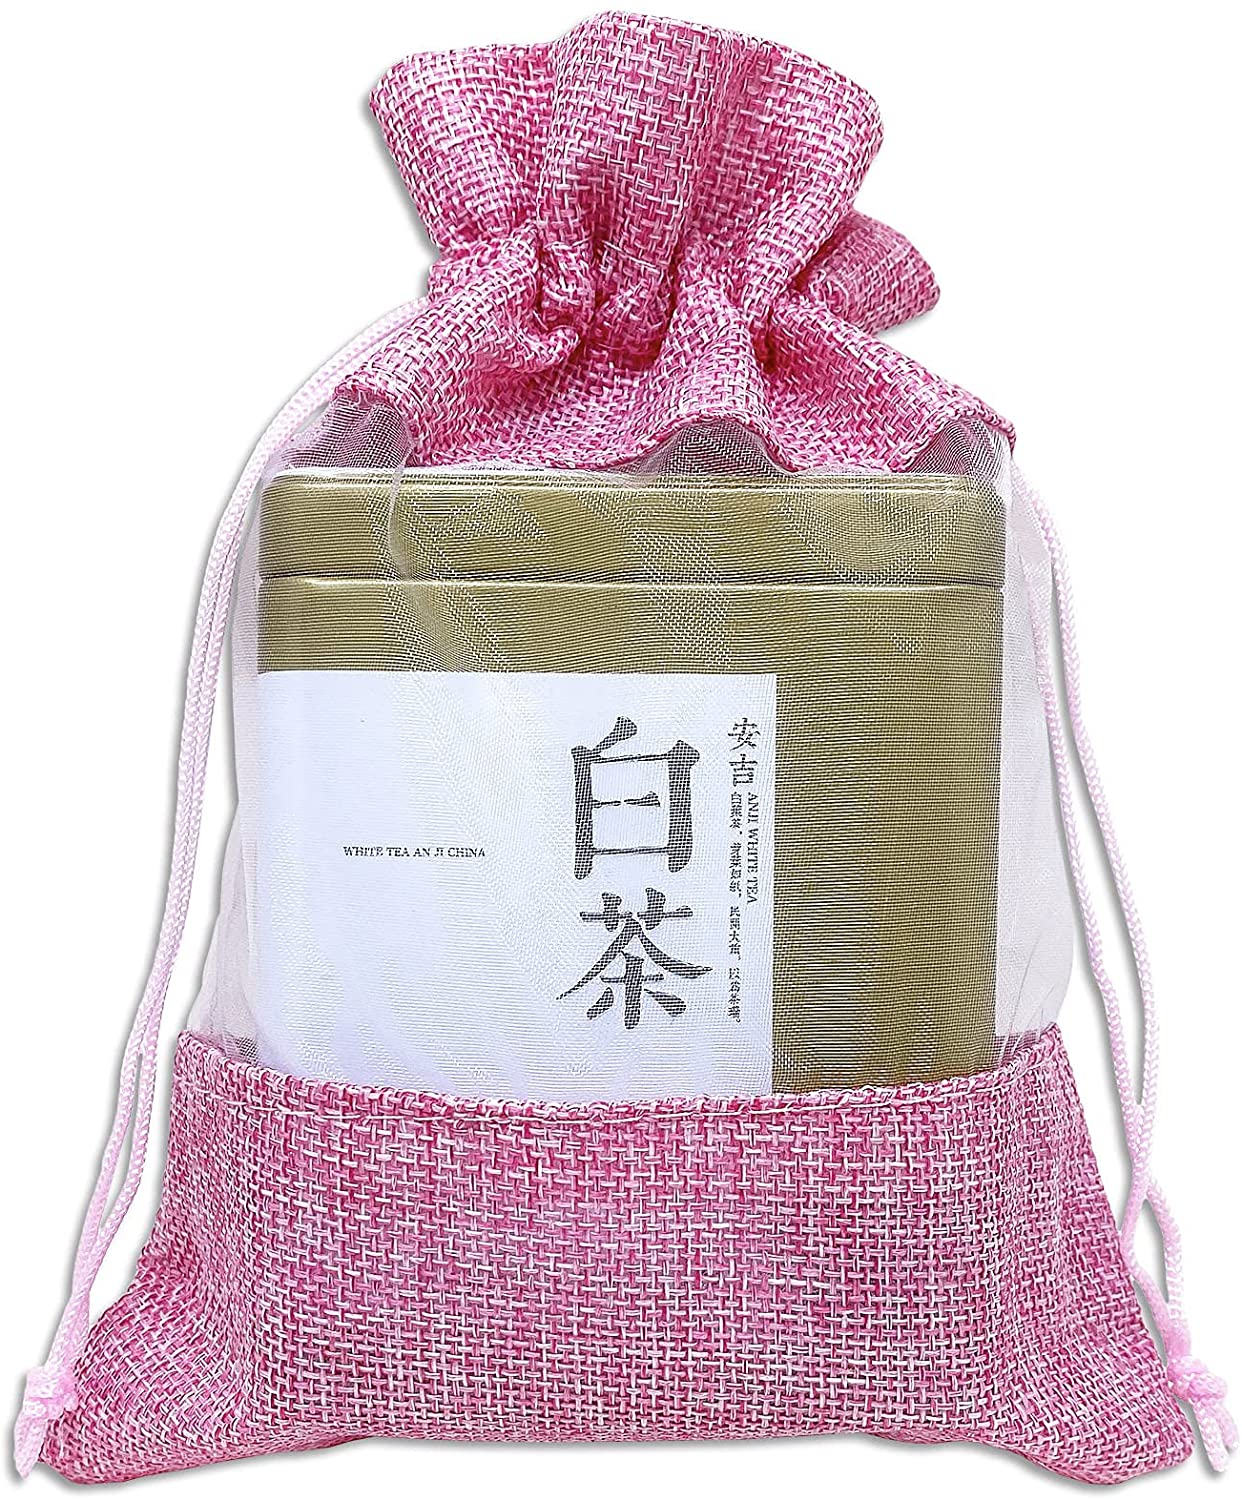 6 1/2" x 8 1/2" Linen Burlap and Sheer Organza Pink Gift Bag